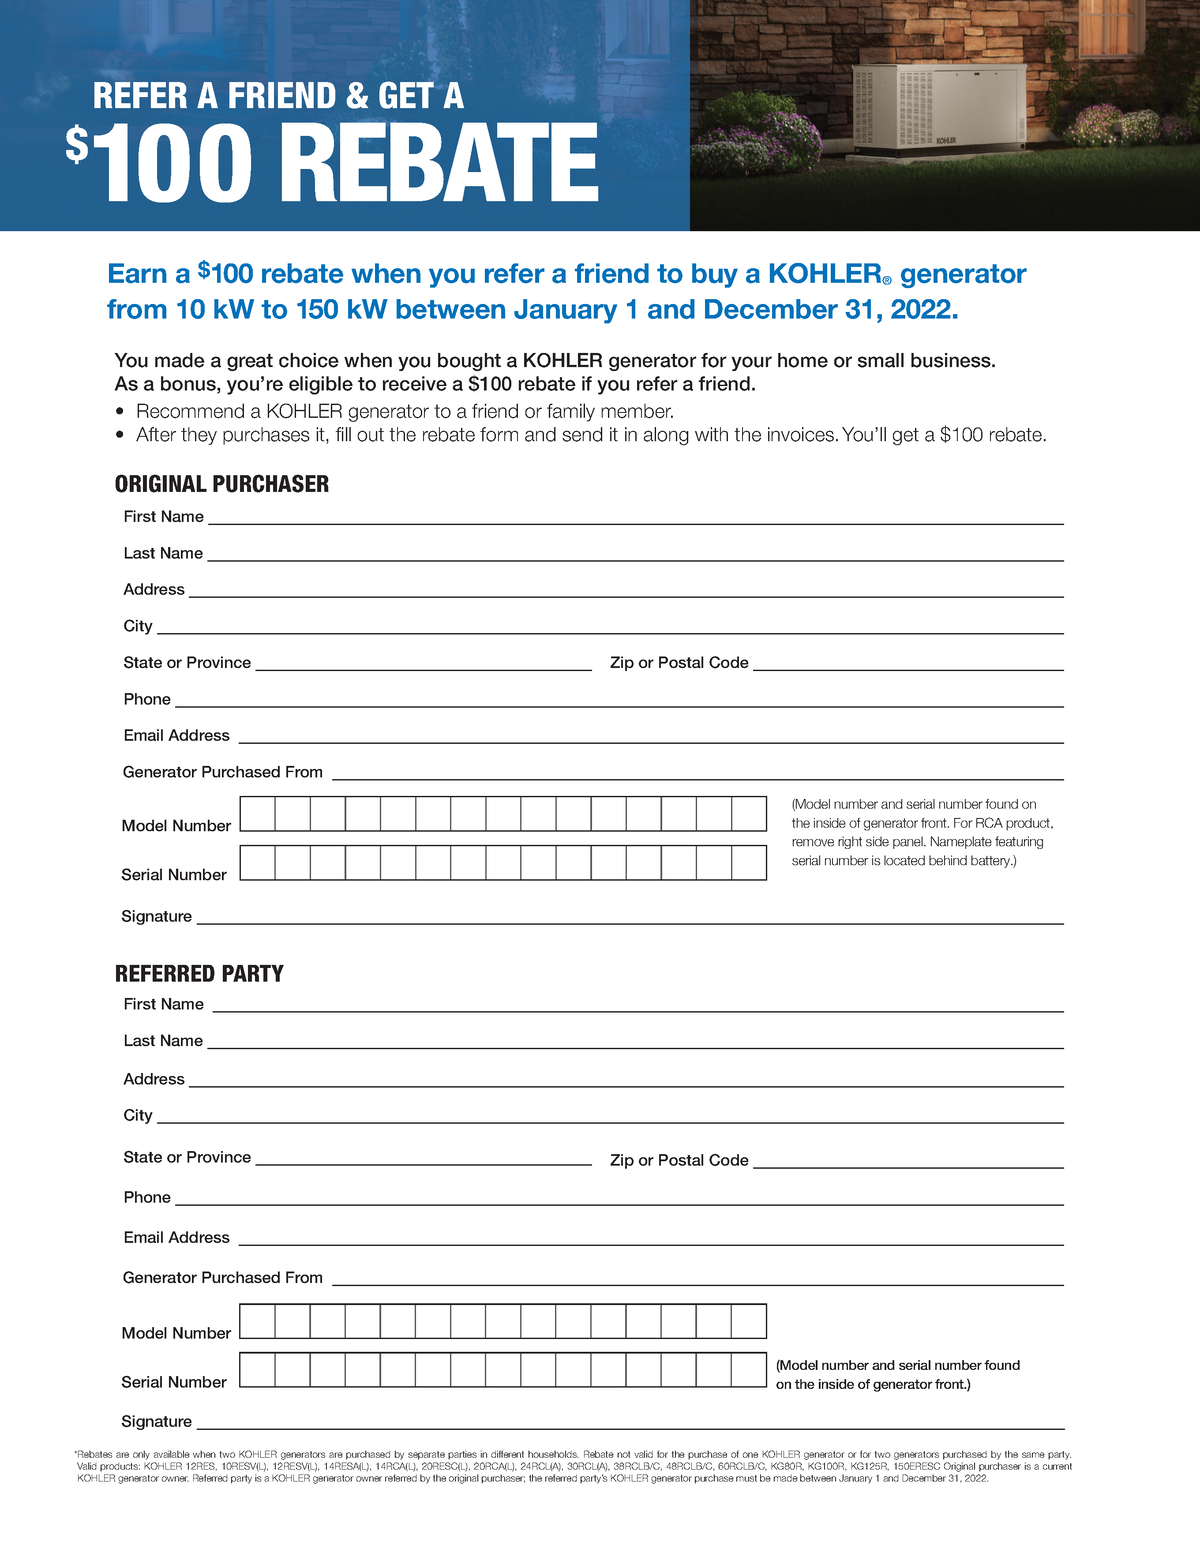 Kohler Referral Rebate Form Earn A 100 Rebate When You Refer A 